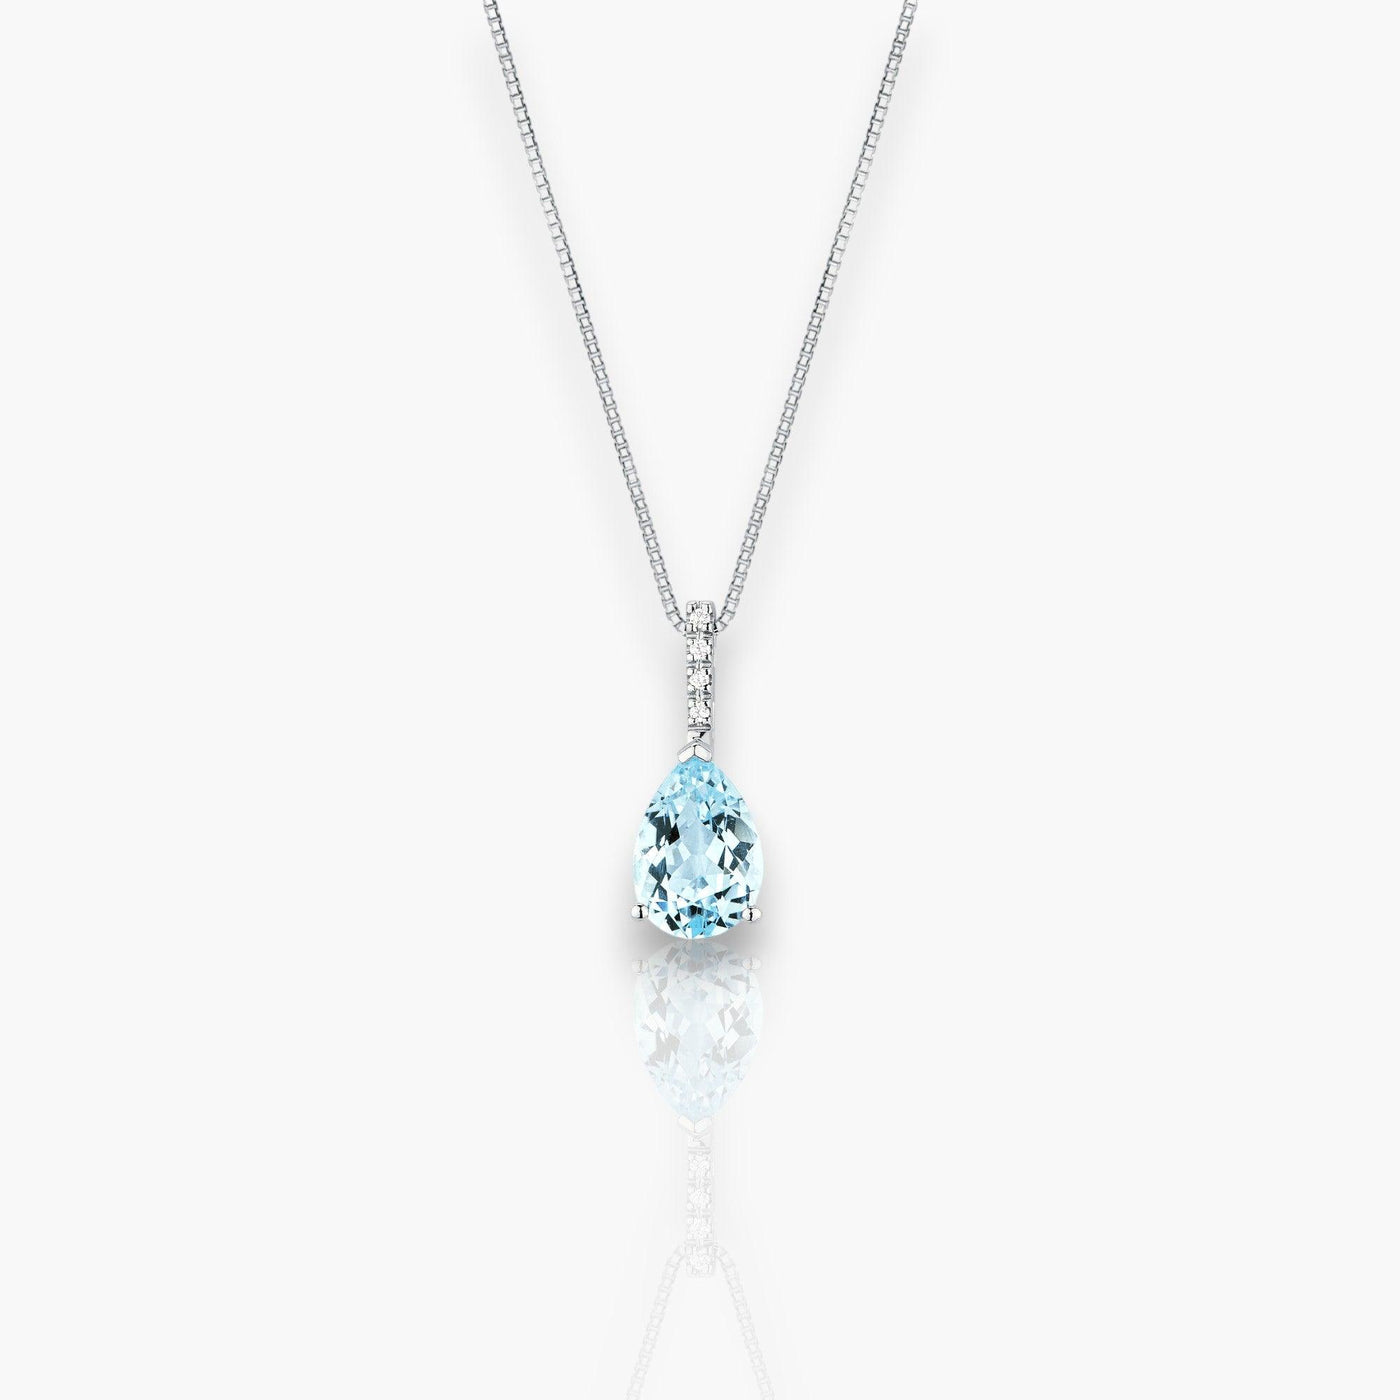 Aquamarine Necklace with diamonds - Moregola Fine Jewelry